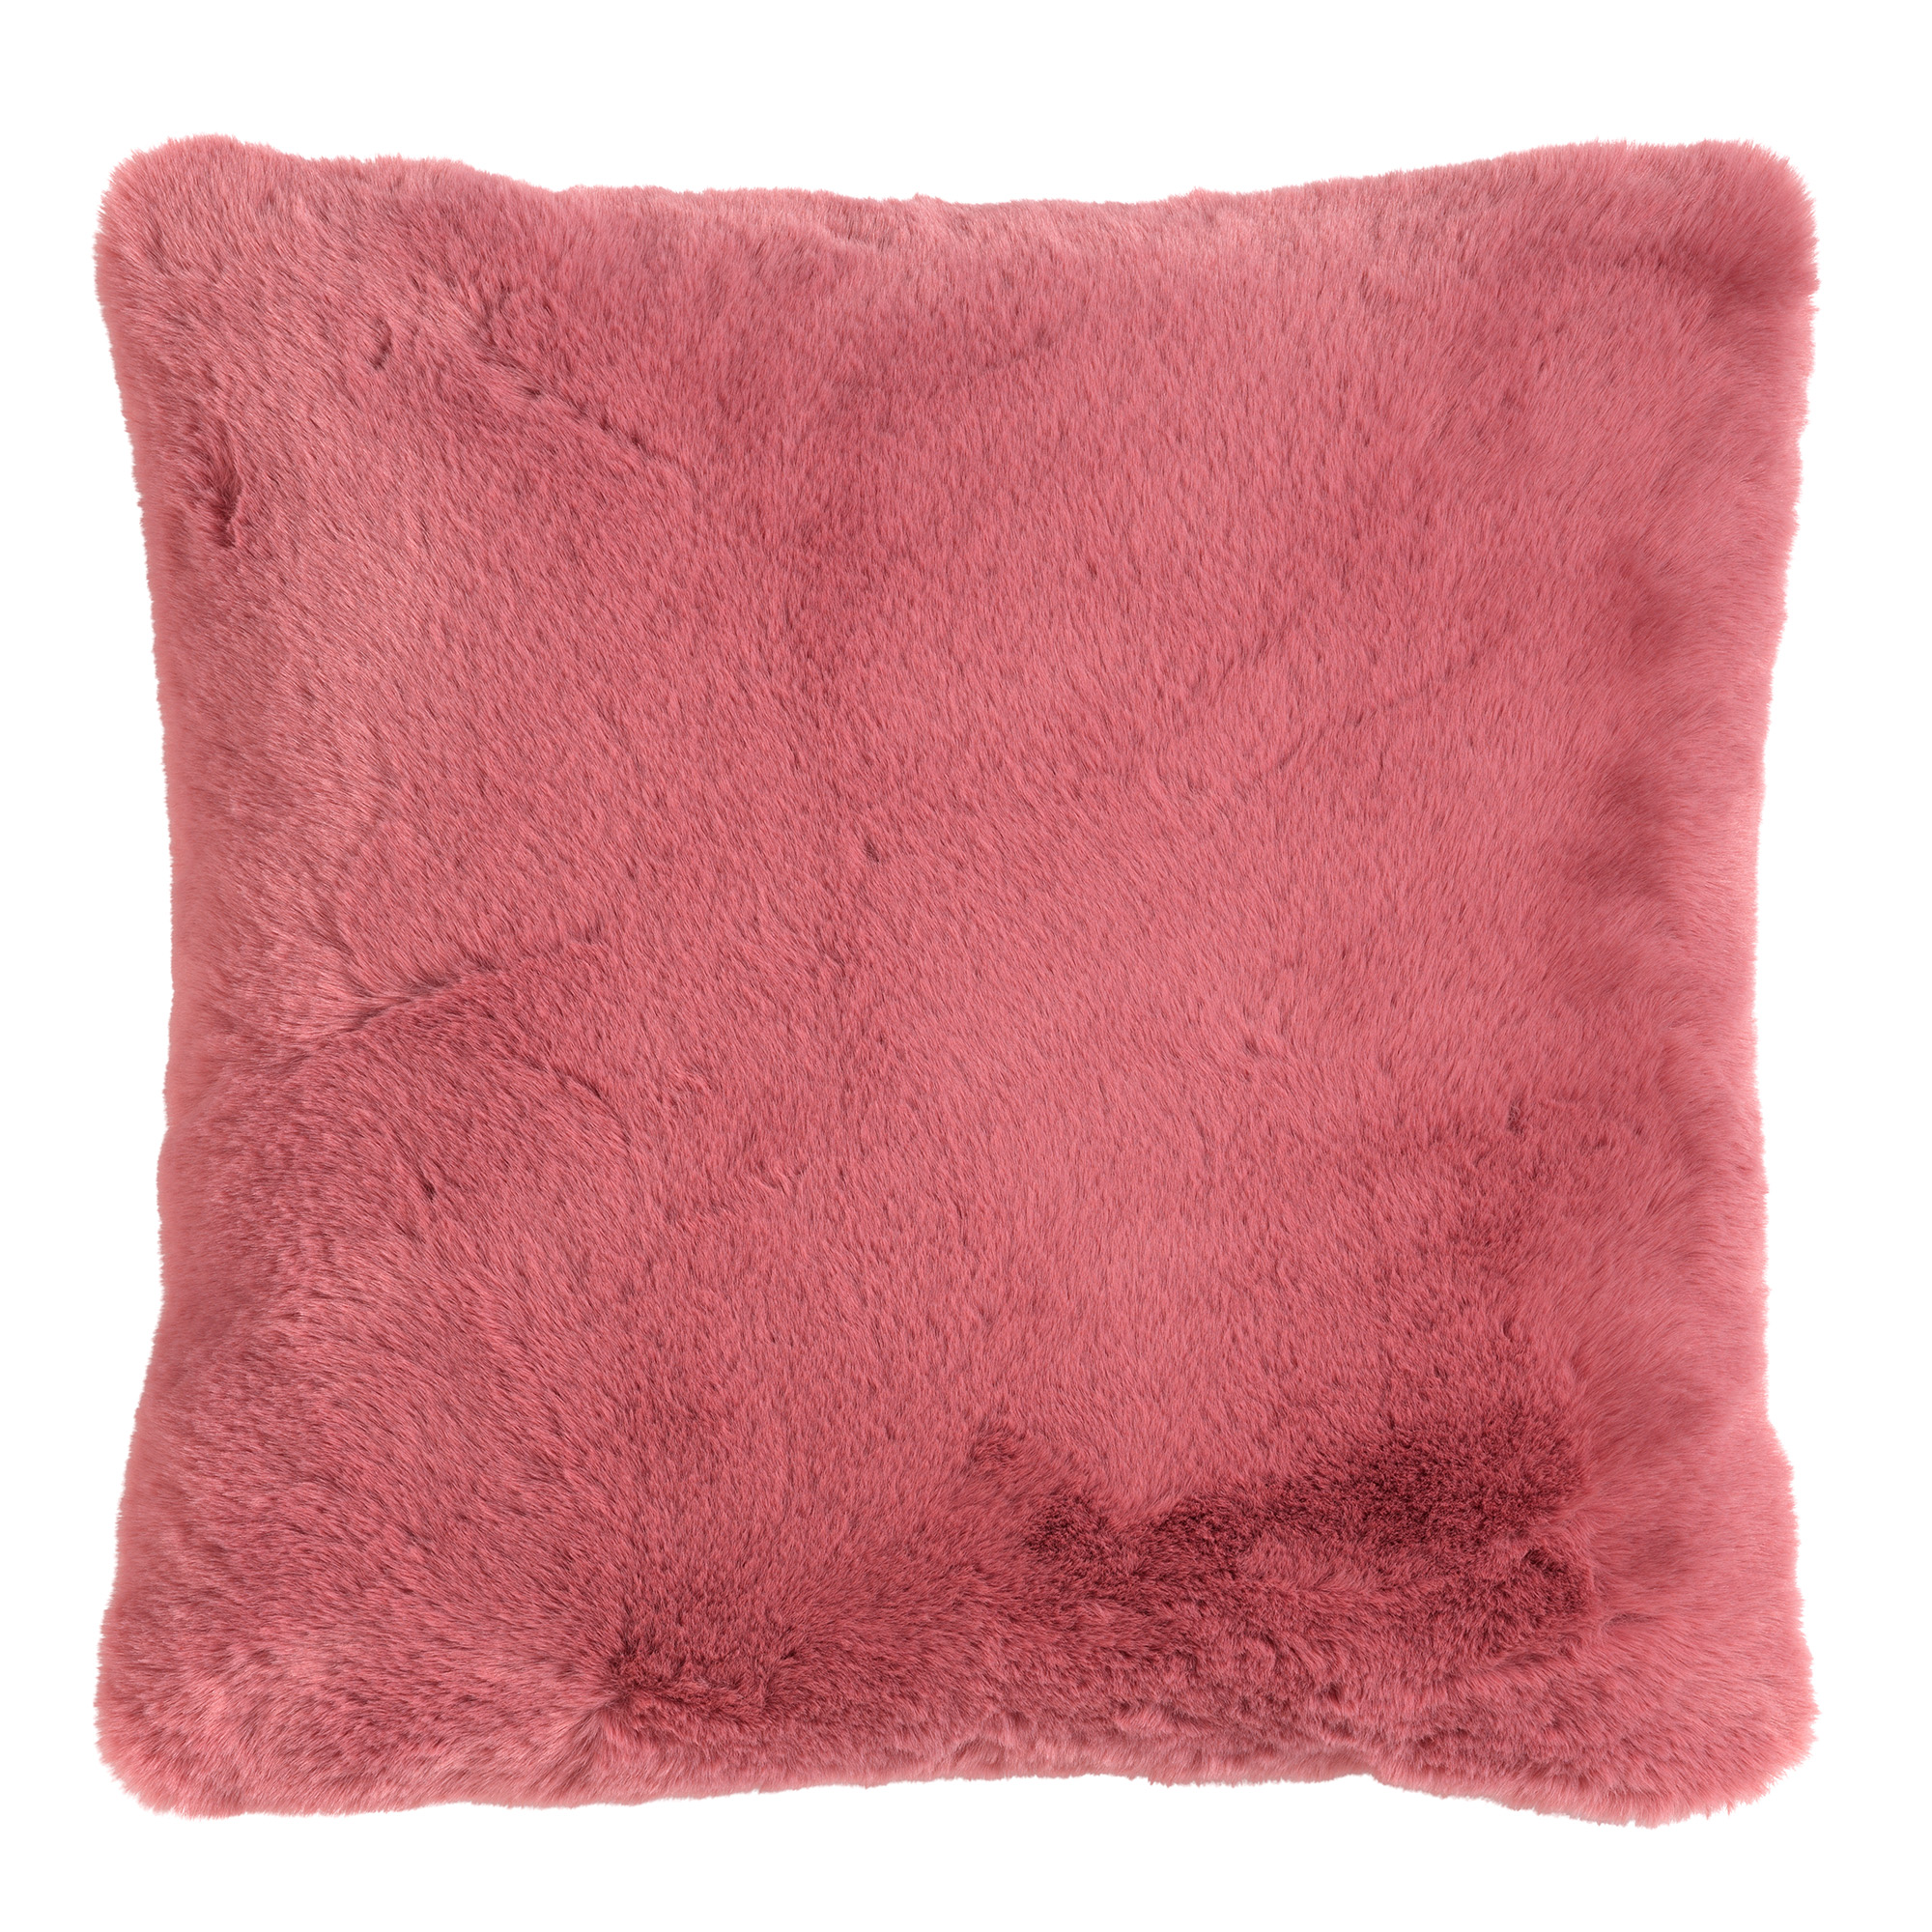 ZAYA - Kussenhoes unikleur 45x45 cm - Dusty Rose - roze - superzacht